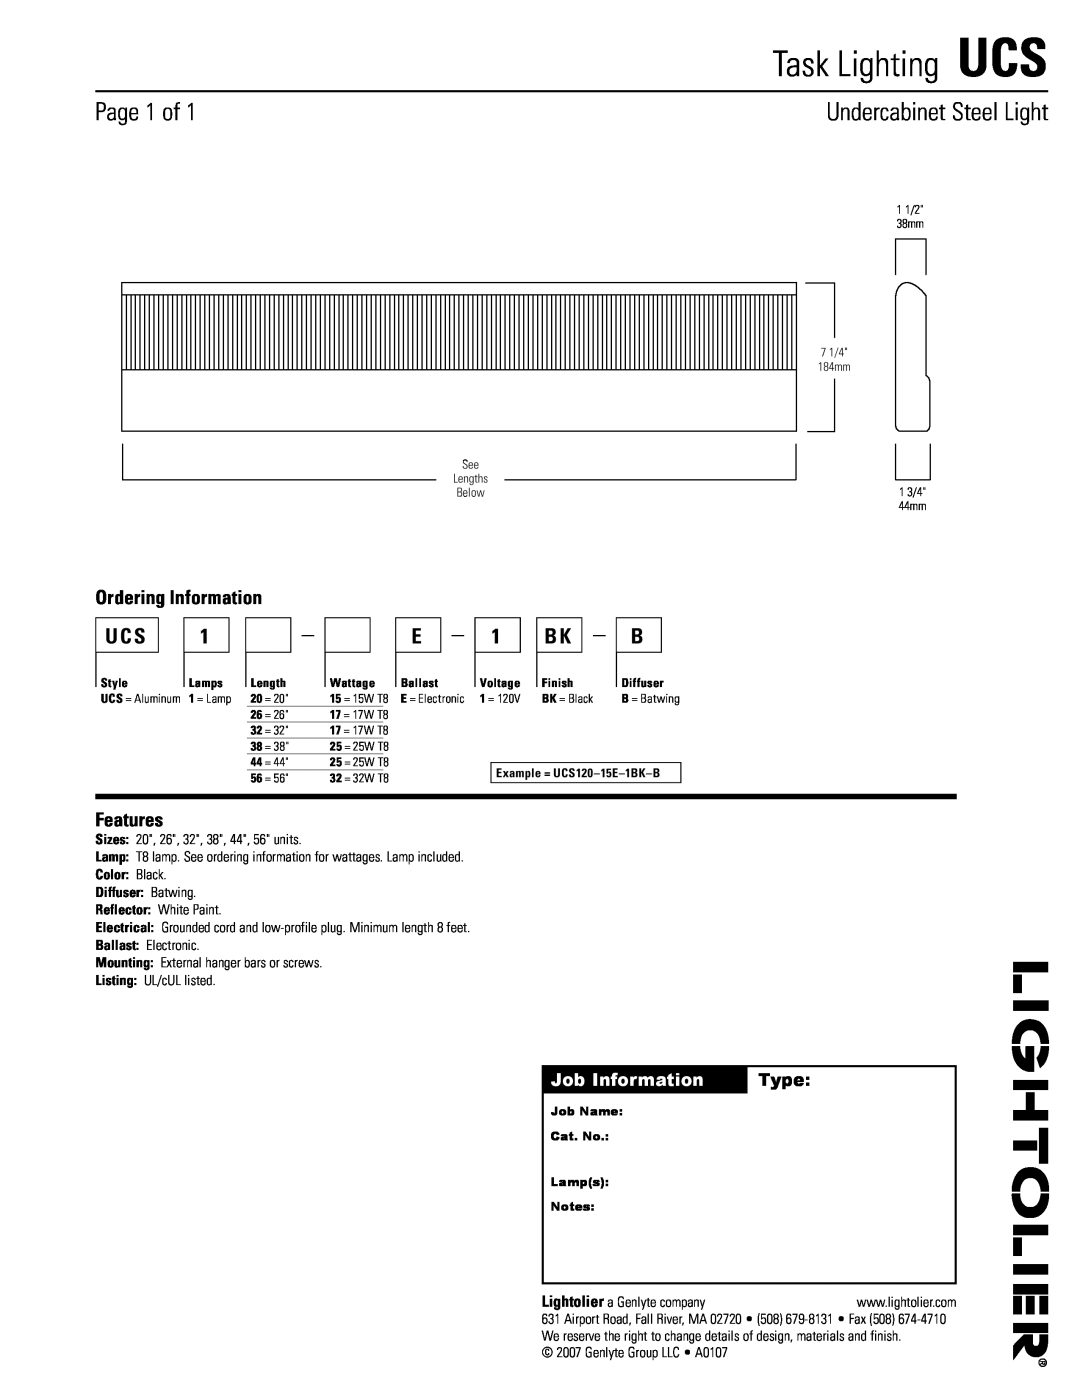 Lightolier manual Task Lighting UCS, Page of, Undercabinet Steel Light, U C S, Ordering Information, Features, Type 